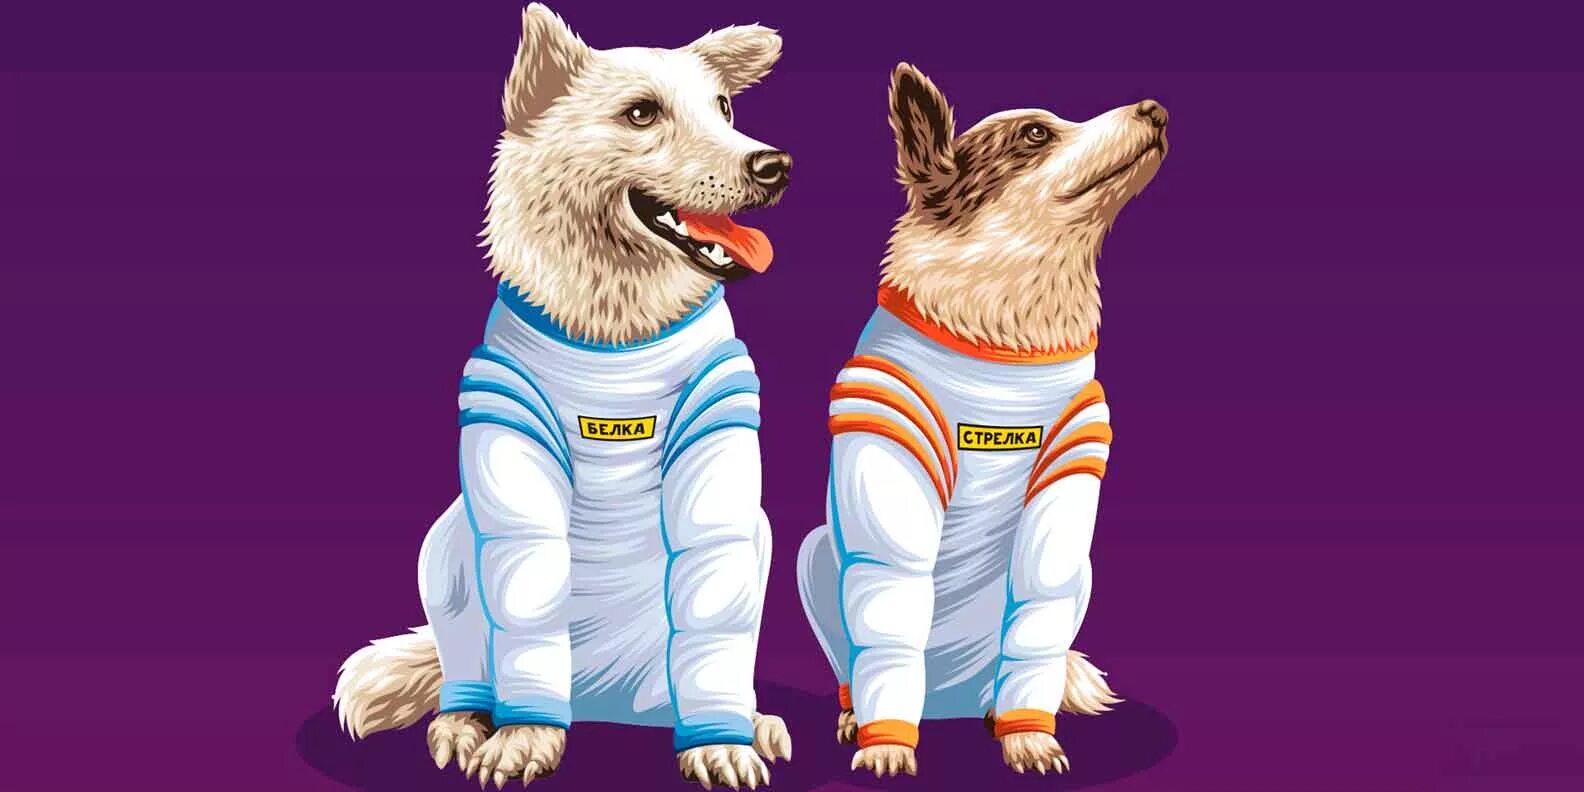 Белка и стрелка рисунок для детей. Белка и стрелка космонавты в космосе. Белка и стрелка собаки космонавты. Белка собака космонавт. Стрелка собака космонавт.